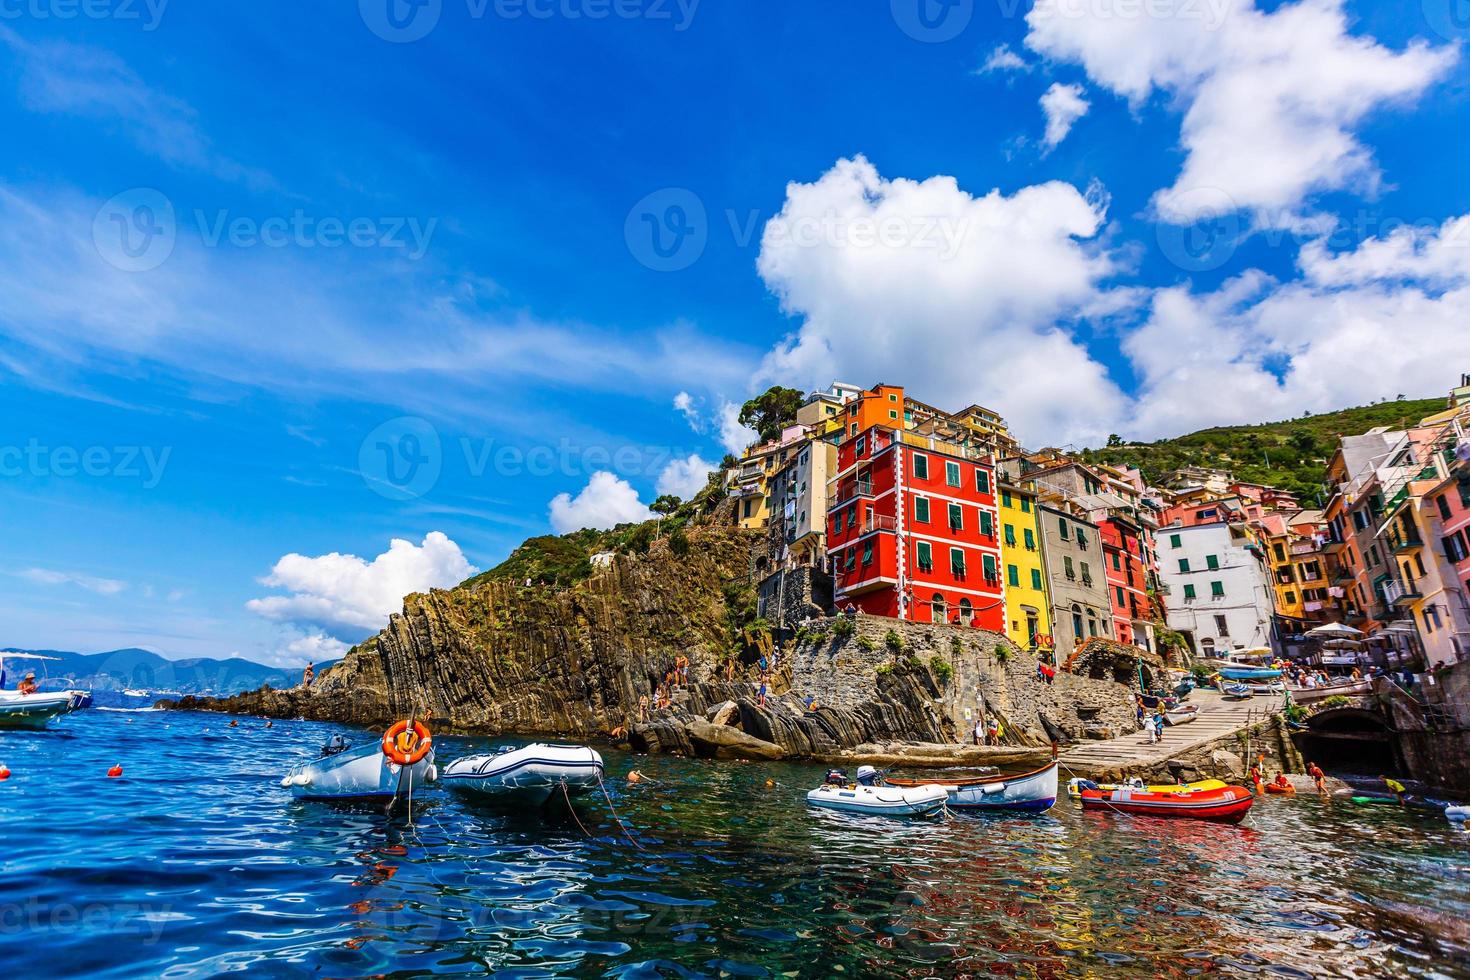 toneel- visie van kleurrijk huizen in cinque terre dorp riomaggiore, manarola foto